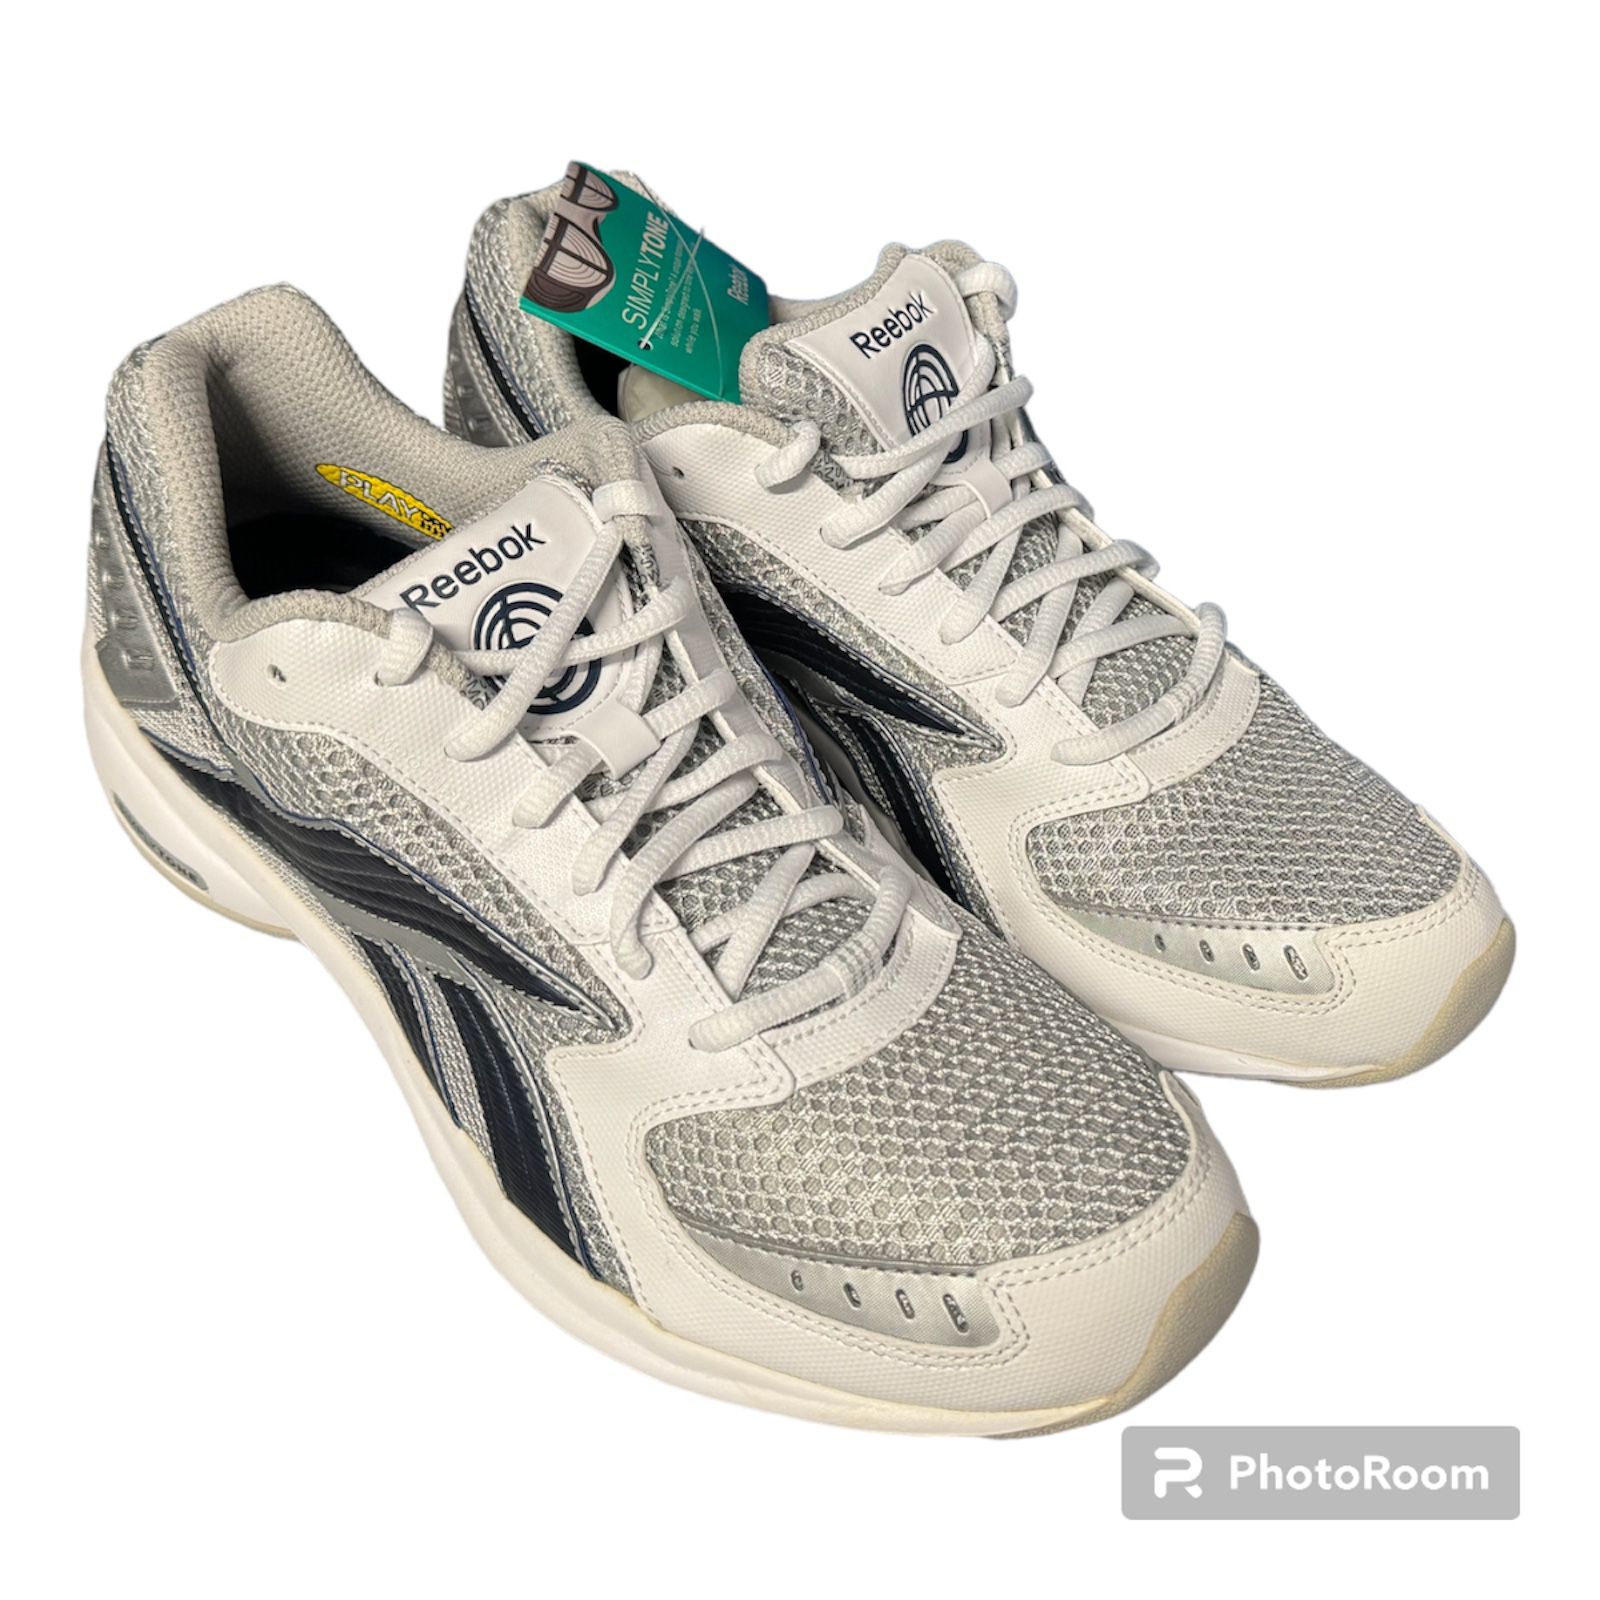 Reebok Simply Tone FLU 610 Men white/Gray Athletic Shoes US Size 9 - Brand New